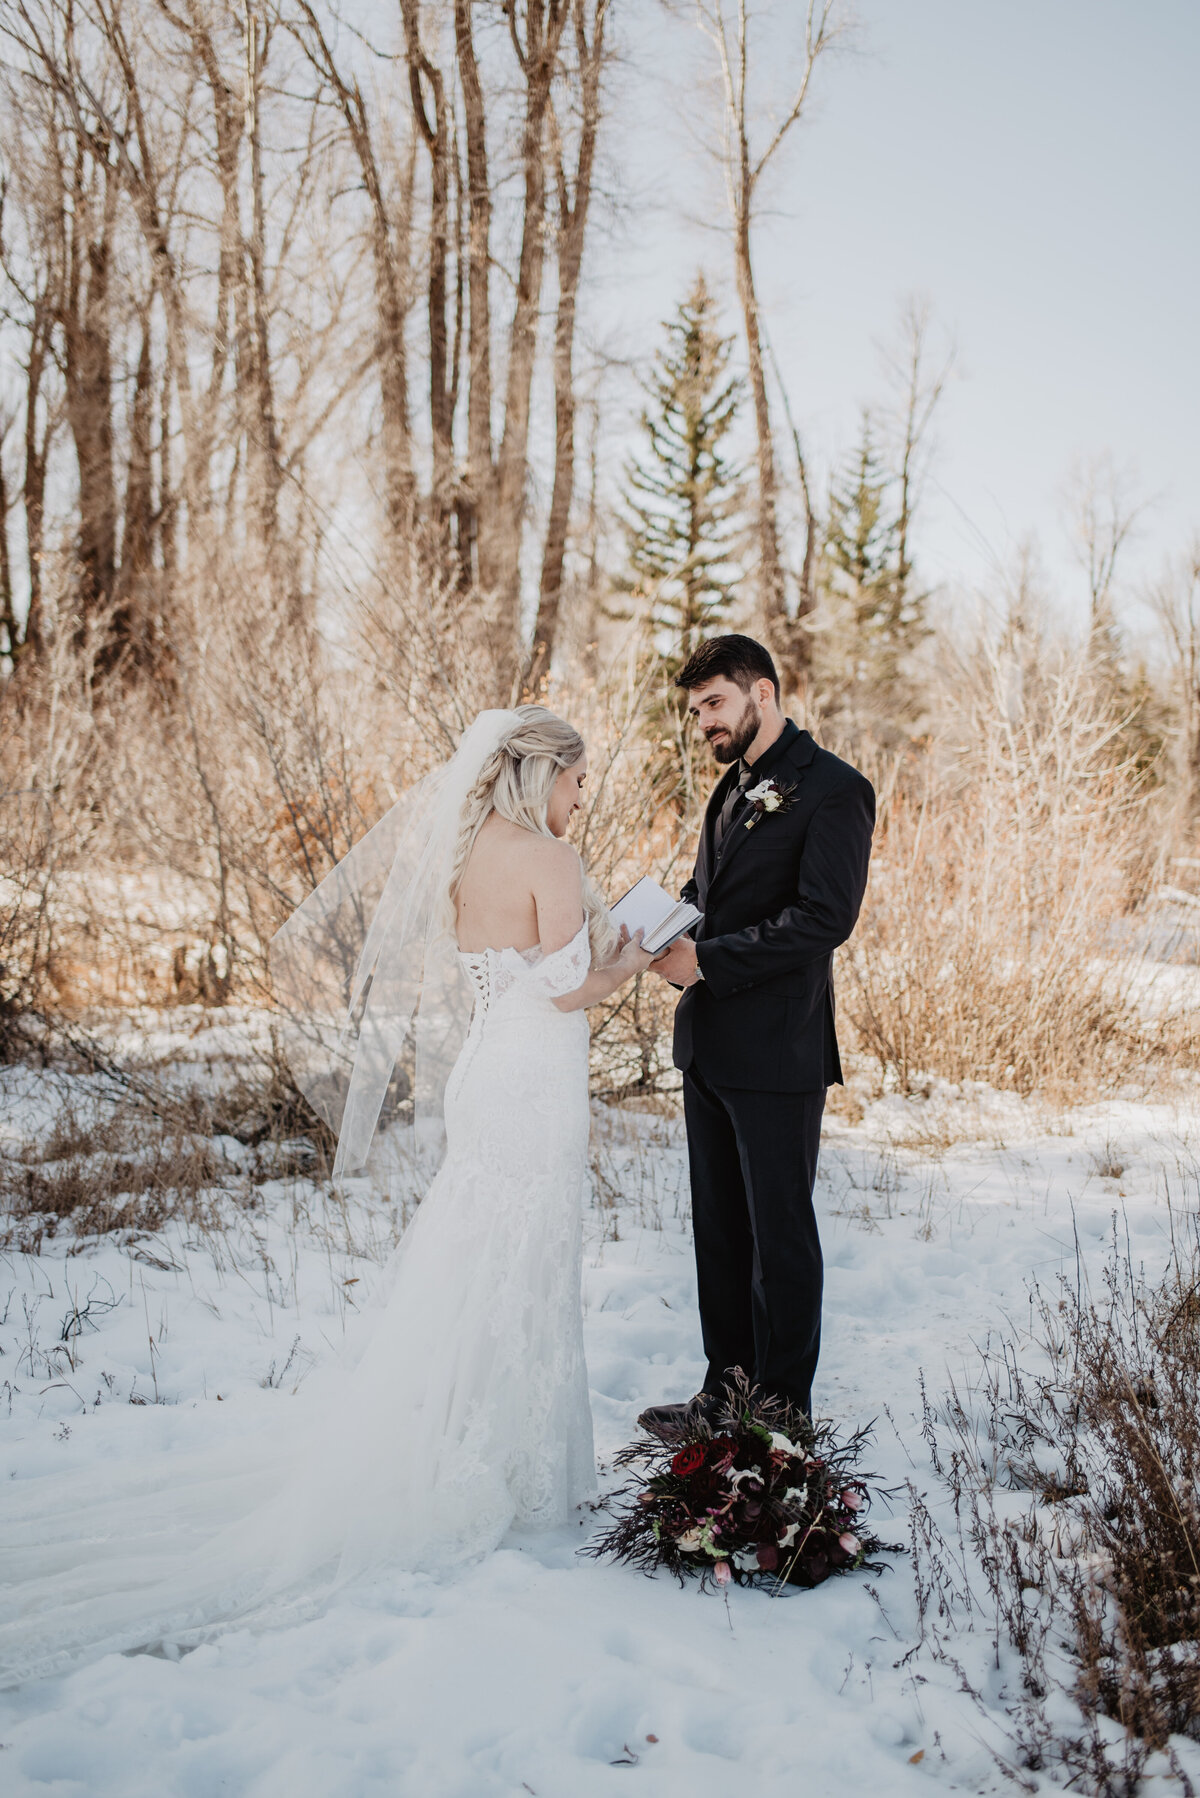 Jackson Hole Photographers capture groom watching bride and listening